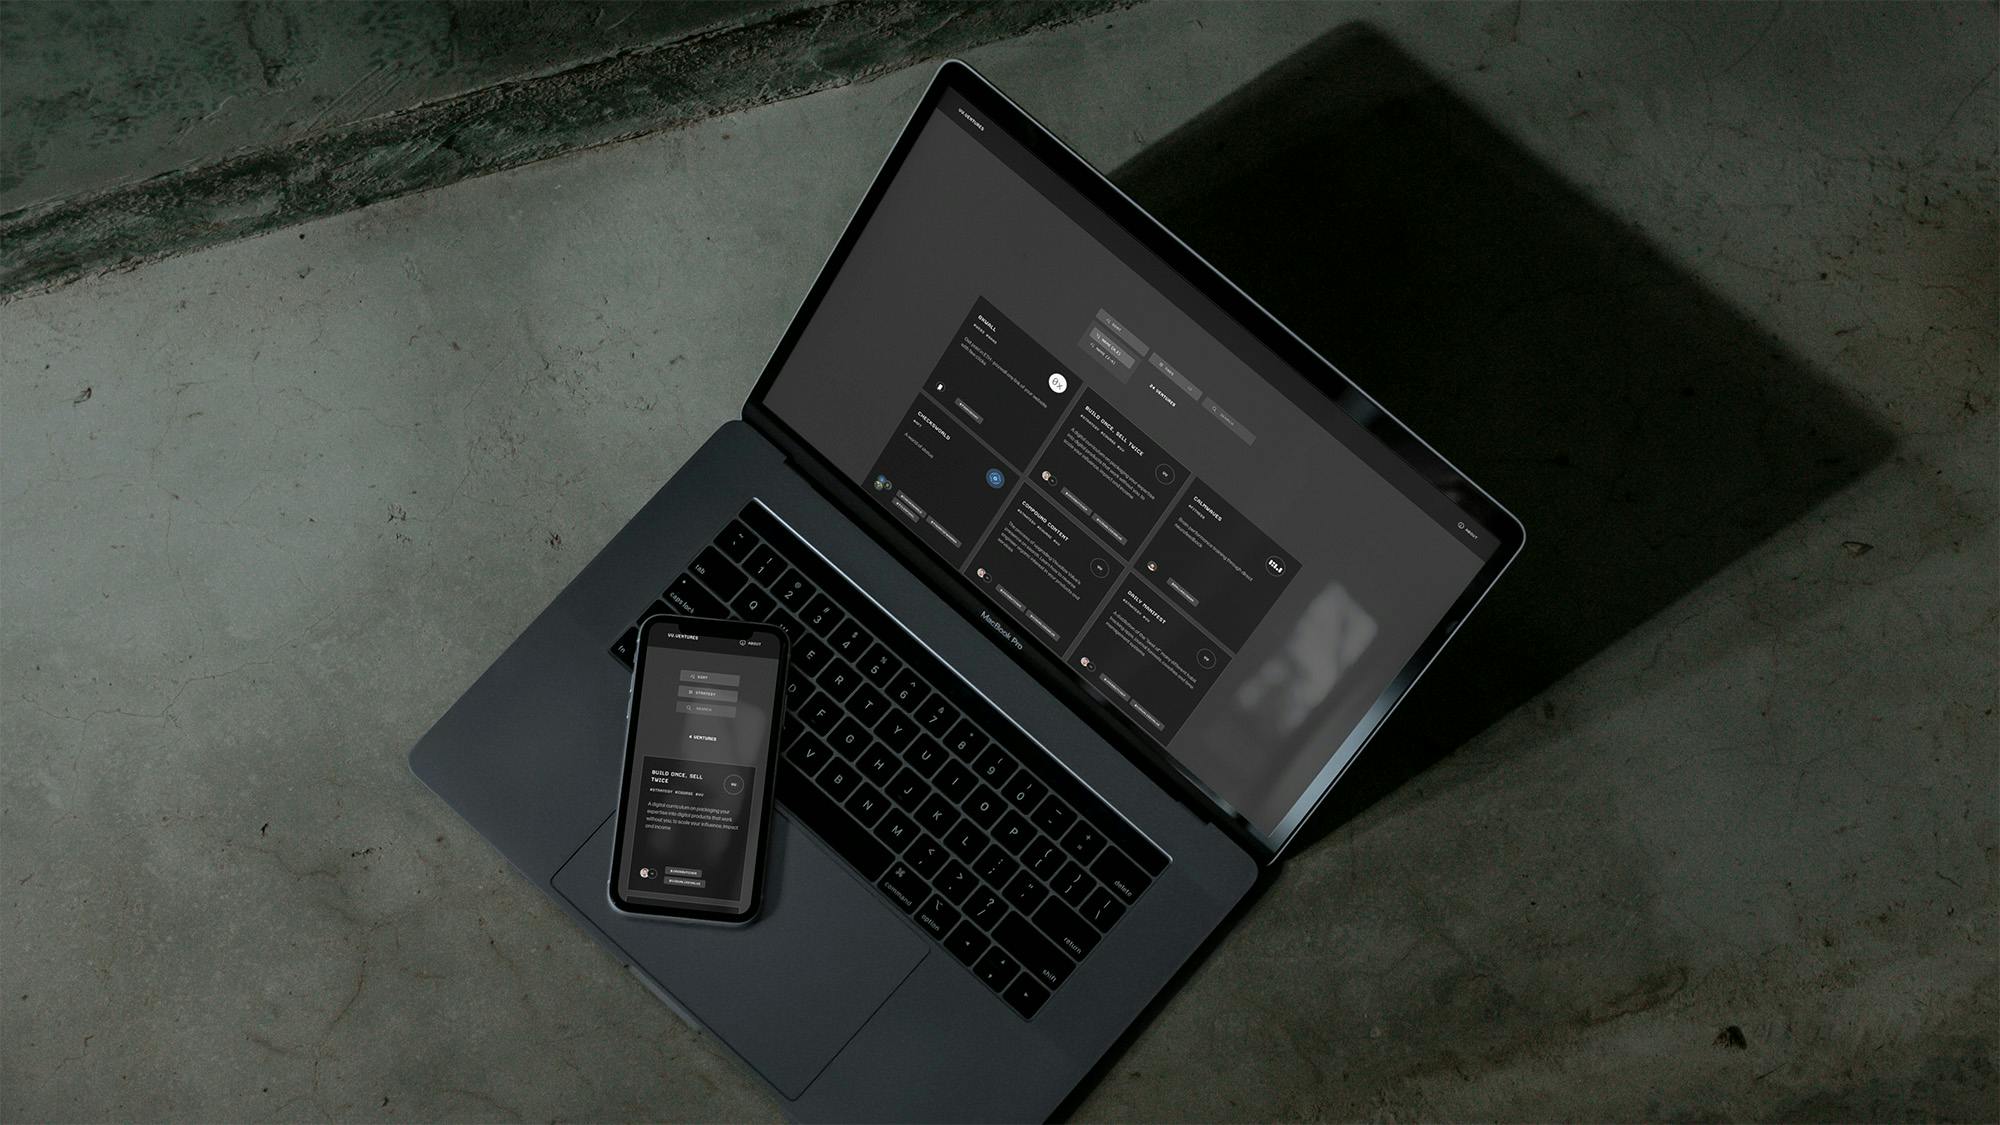 Responsive web app design for VV.Ventures, displayed on laptop and smartphone